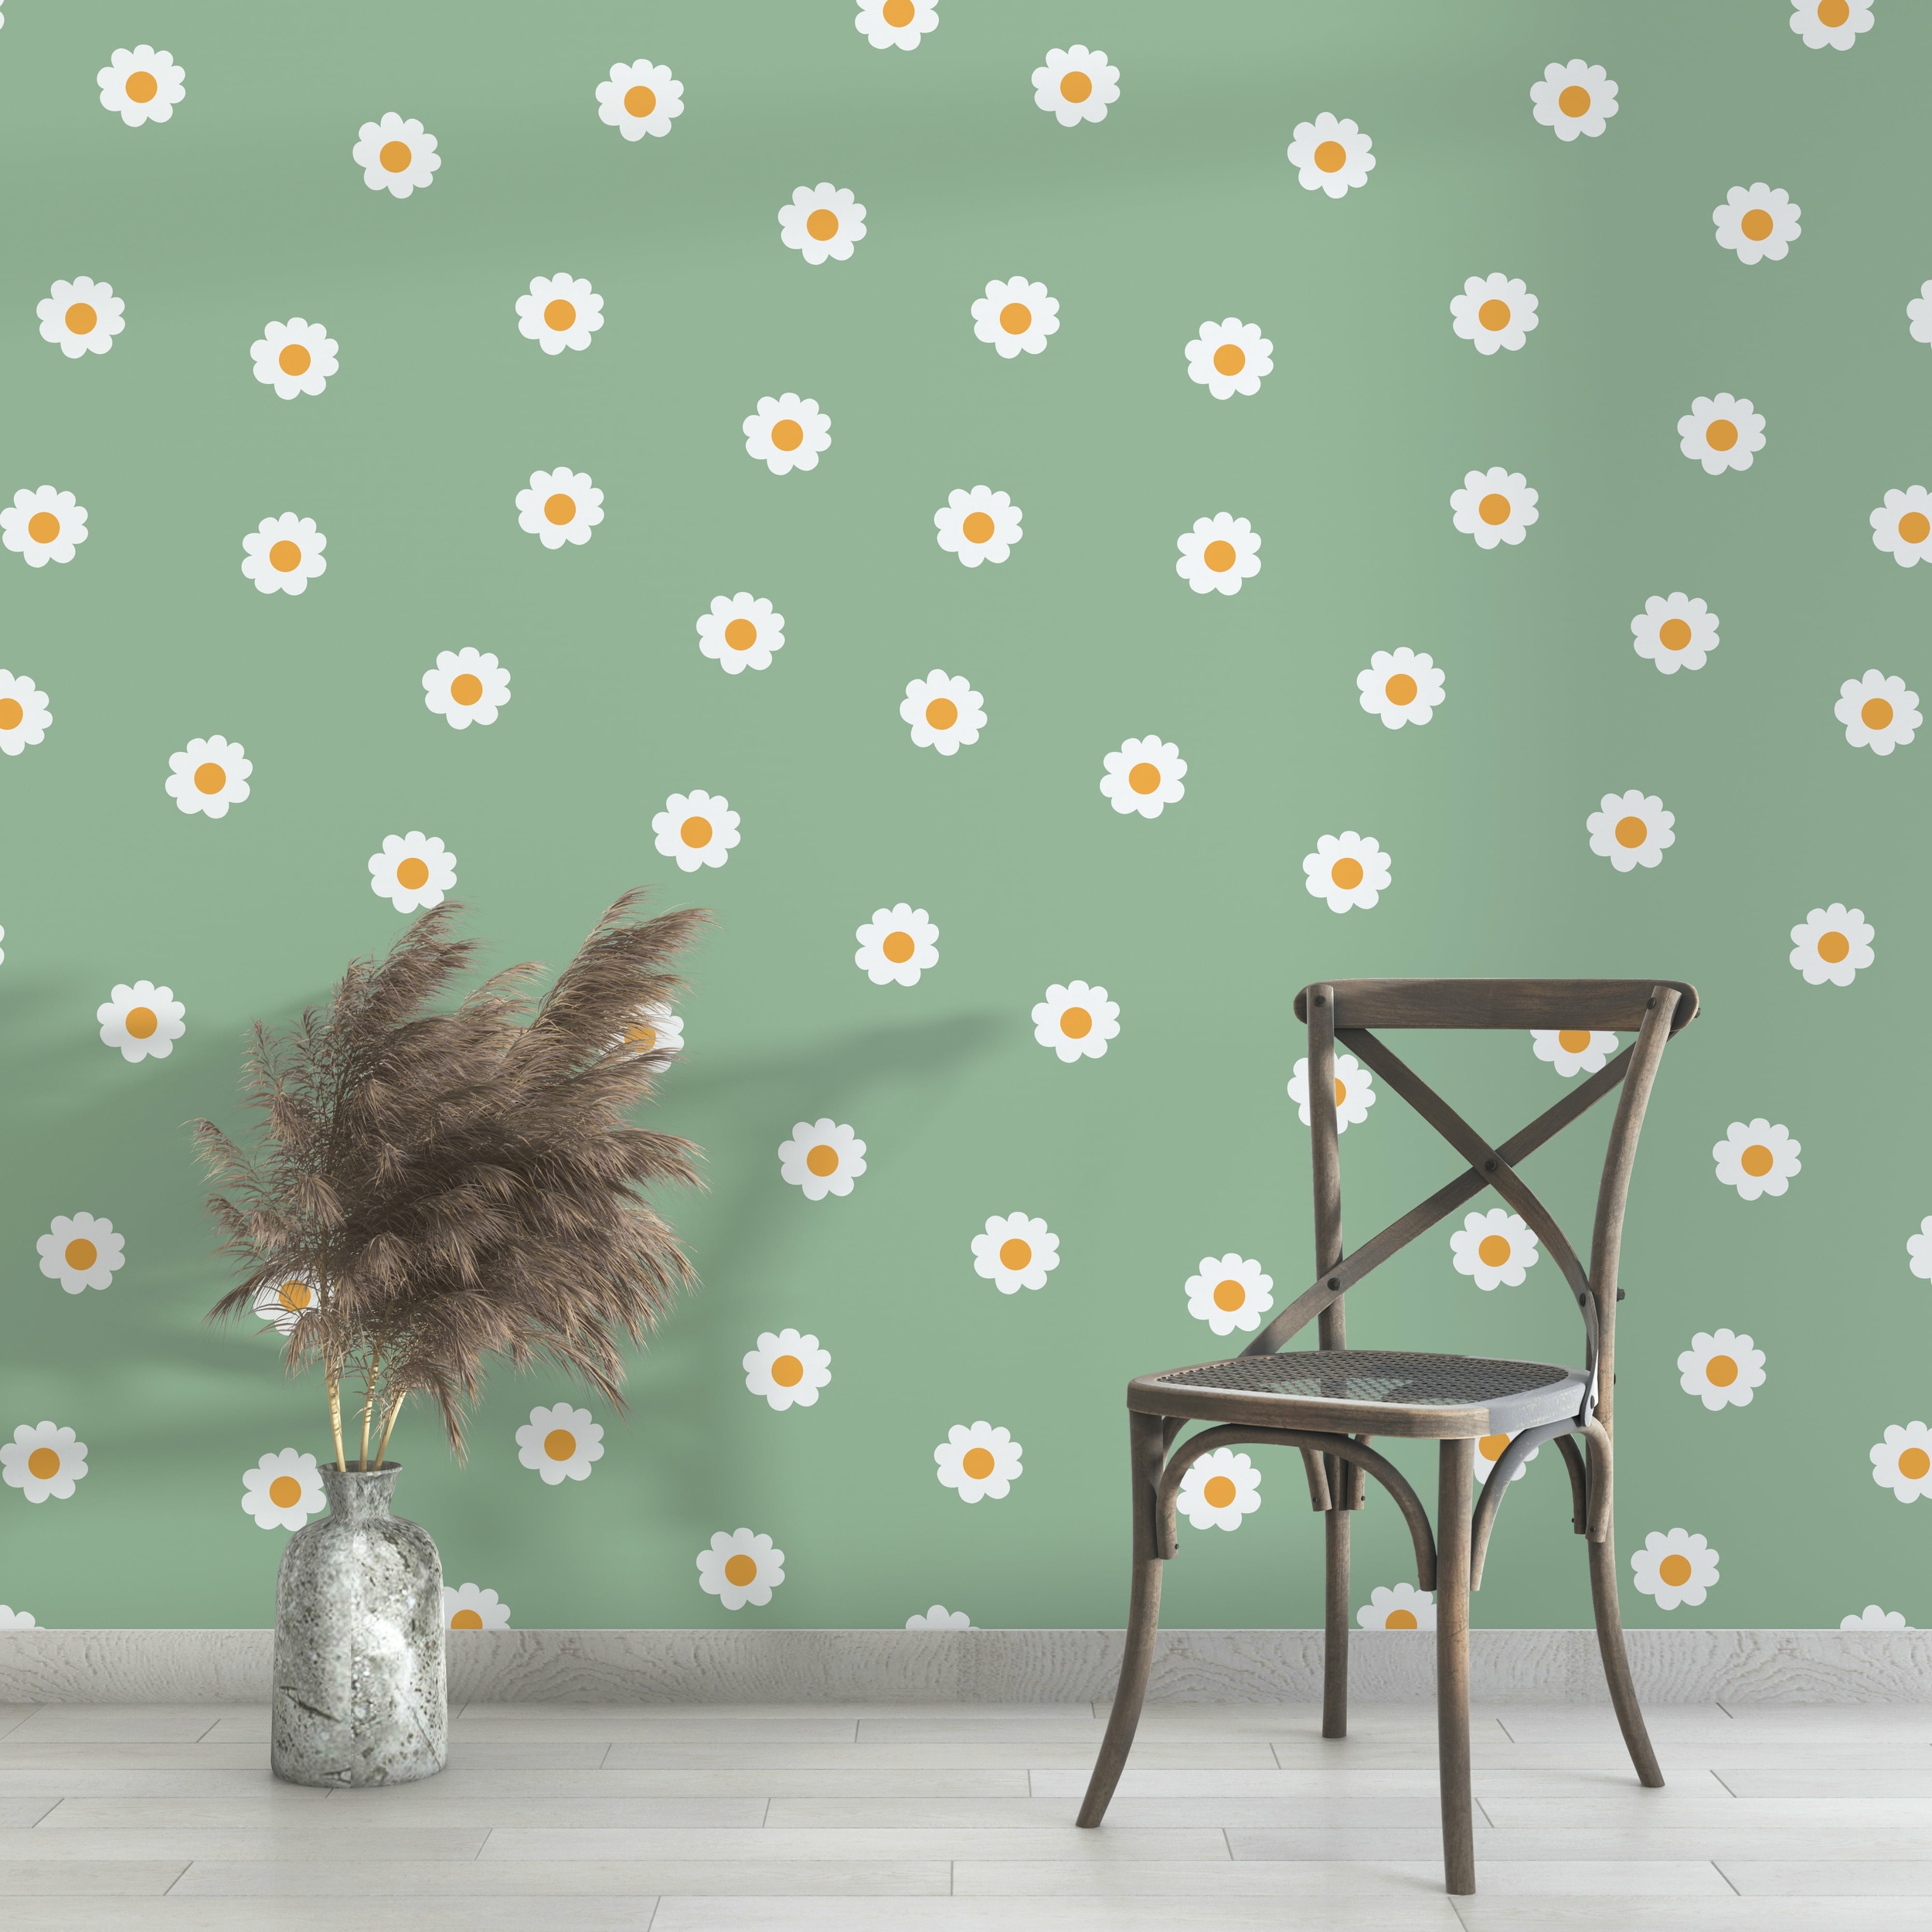 PP108-mur-papier-peint-adhesif-decoratif-revetement-vinyle-motifs-marguerite-fond-vert-renovation-meuble-mur-min